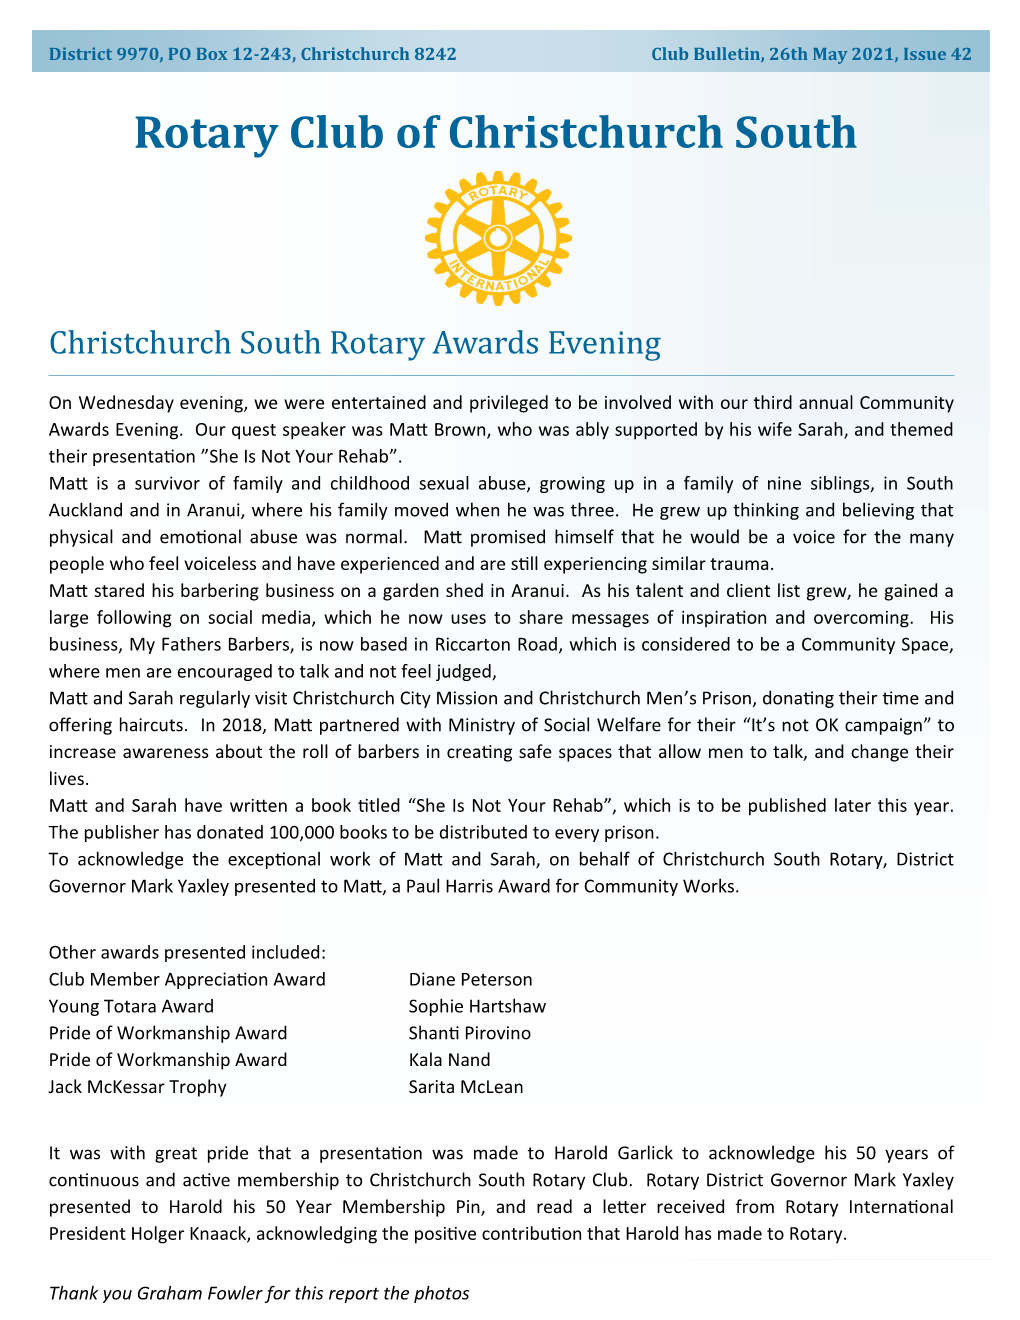 Rotary Club of Christchurch South